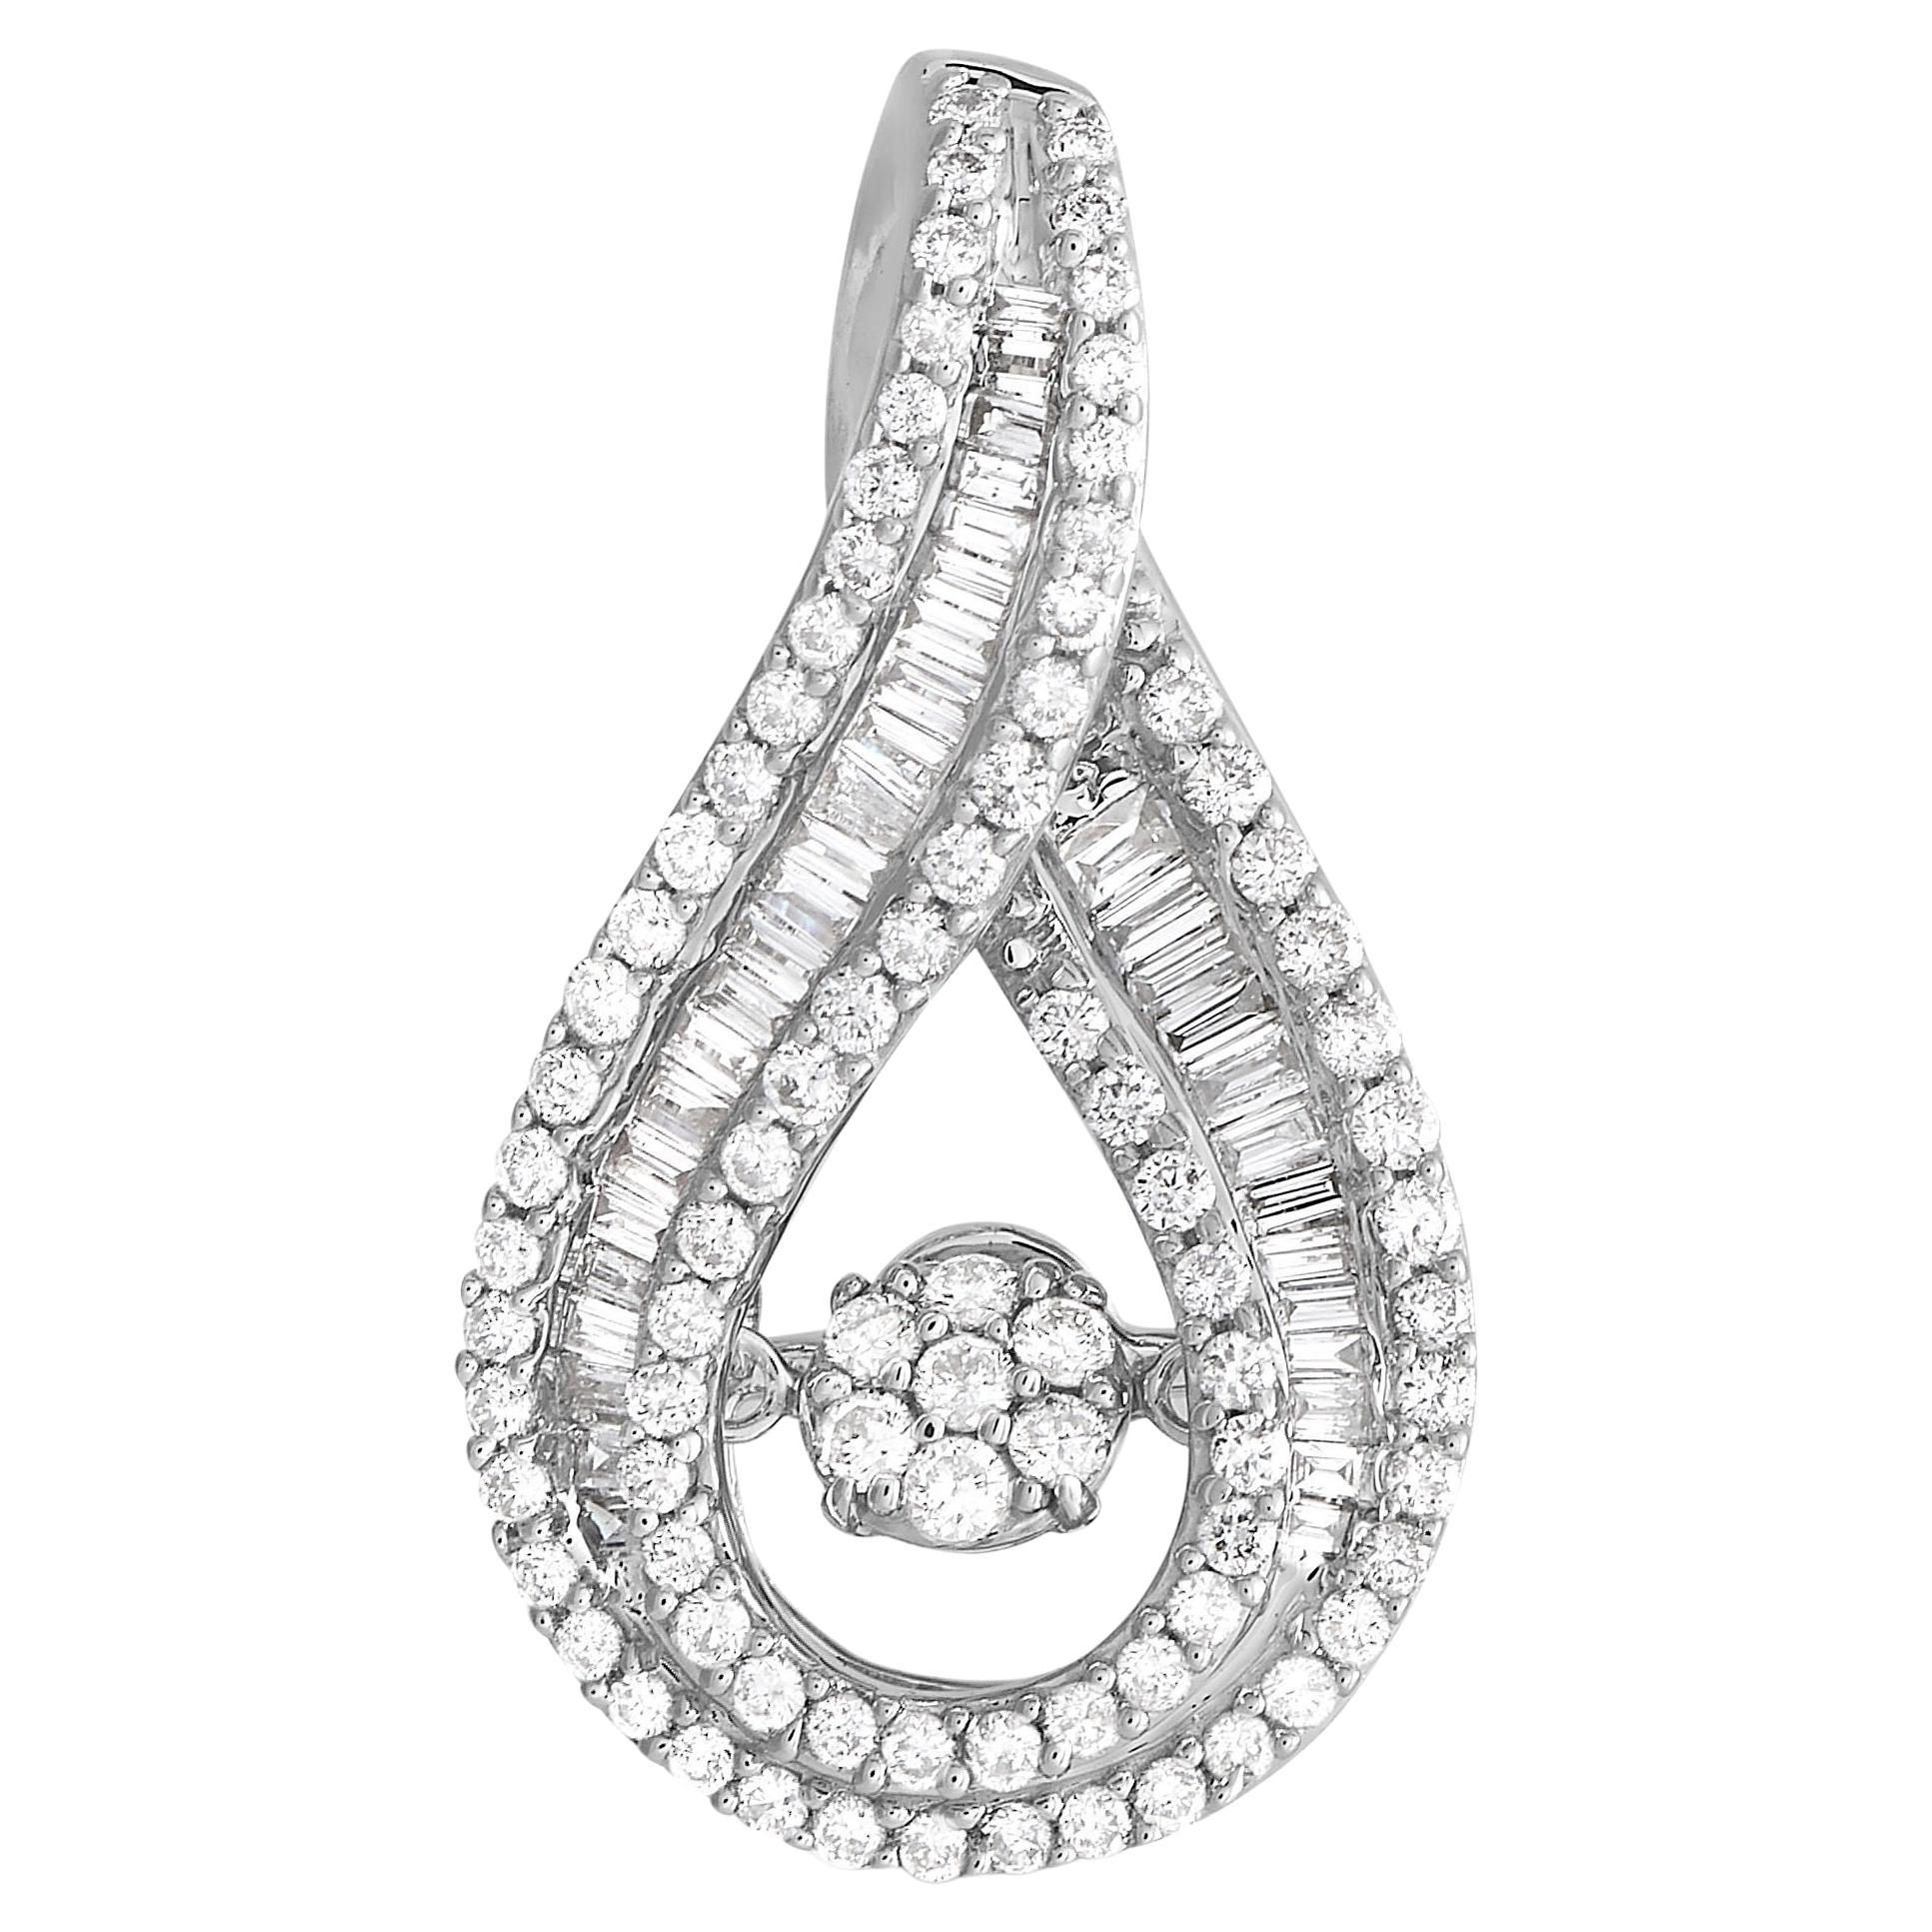 LB Exclusive 14K White Gold 0.75 ct Diamond Teardrop Pendant For Sale